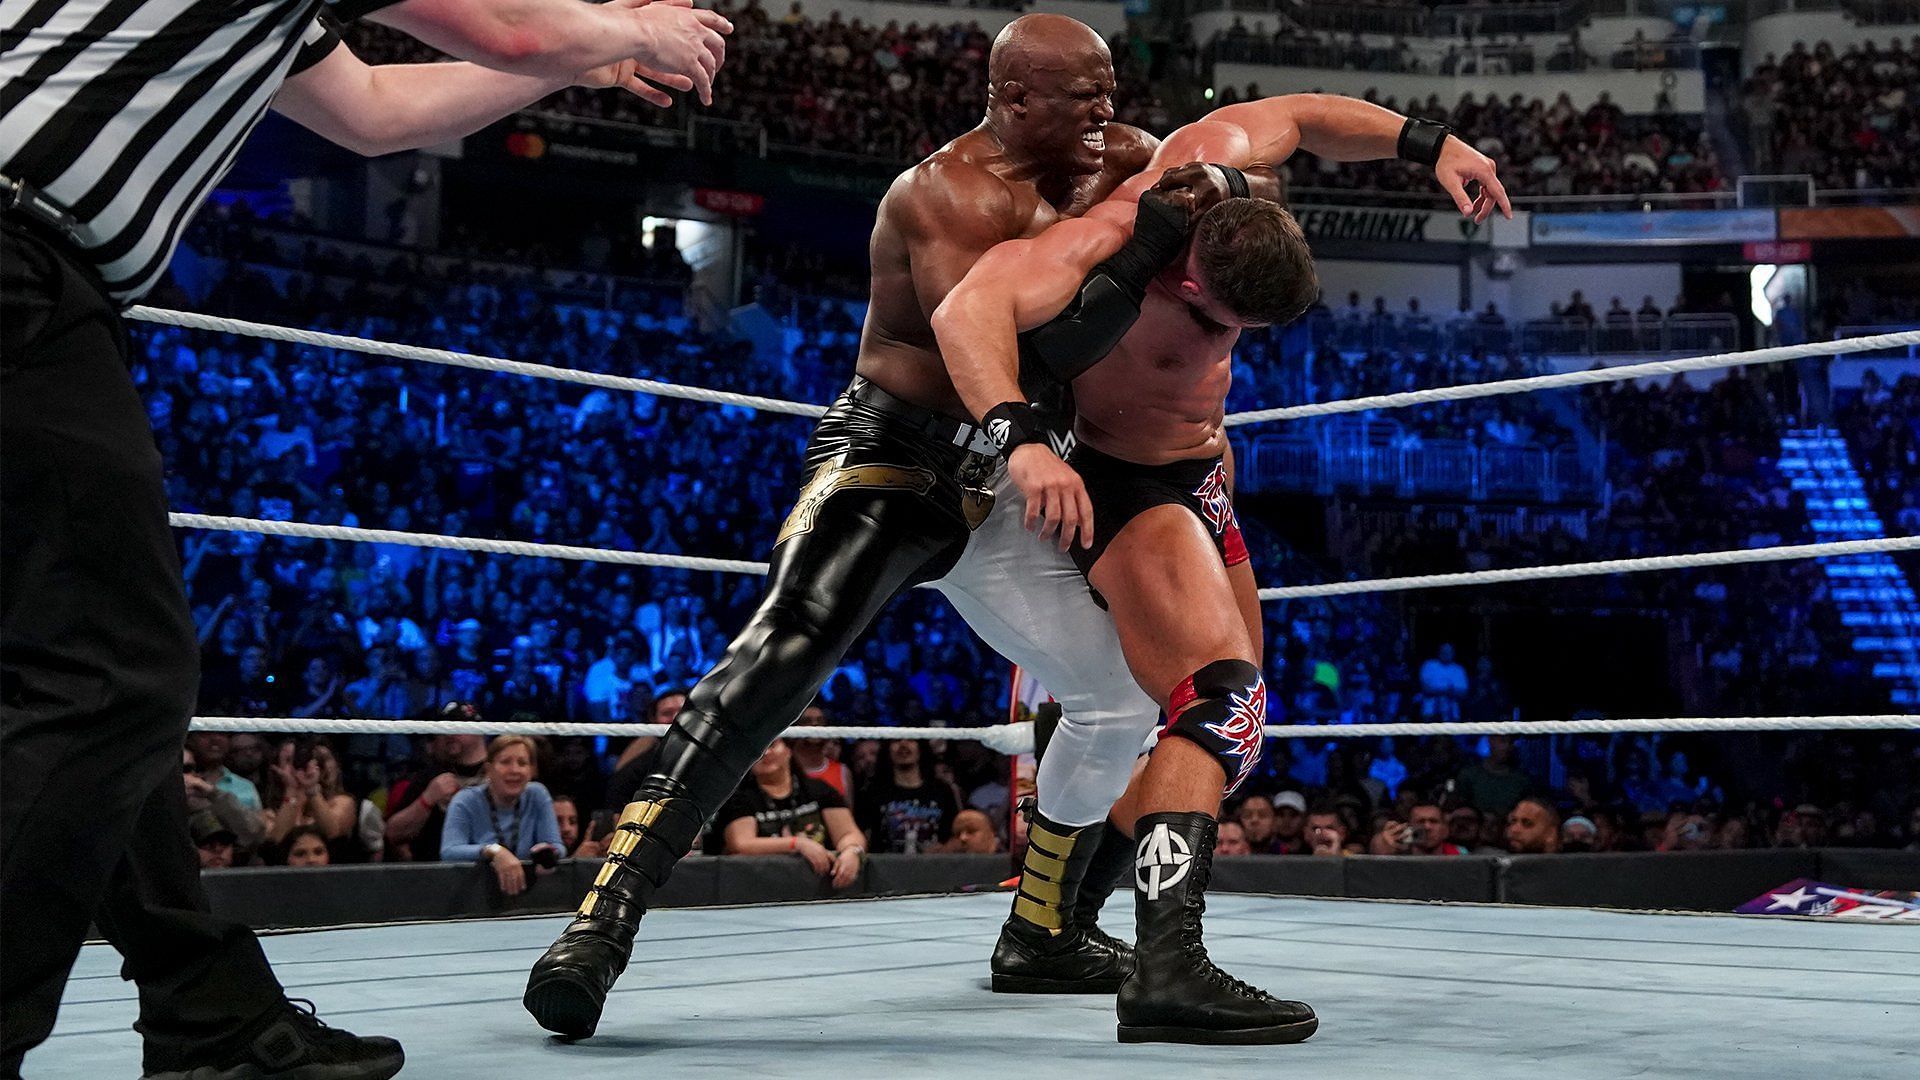 Bobby Lashley applying The Hurt Lock [Image Source: WWE.com]